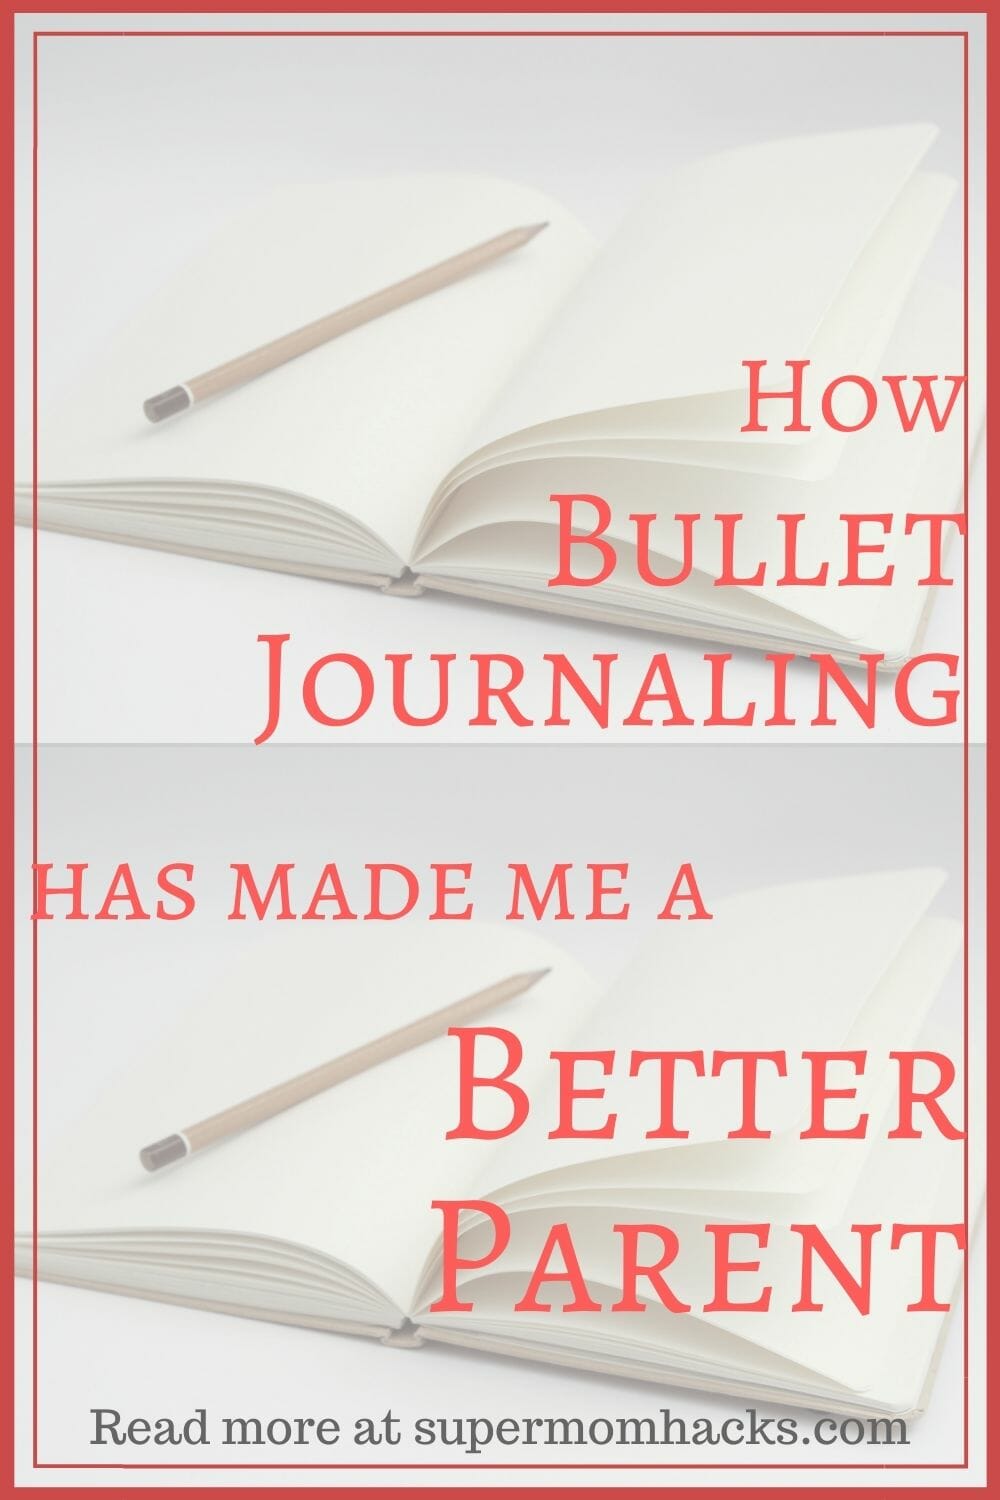 How Bullet Journaling Has Made Me A Better Parent